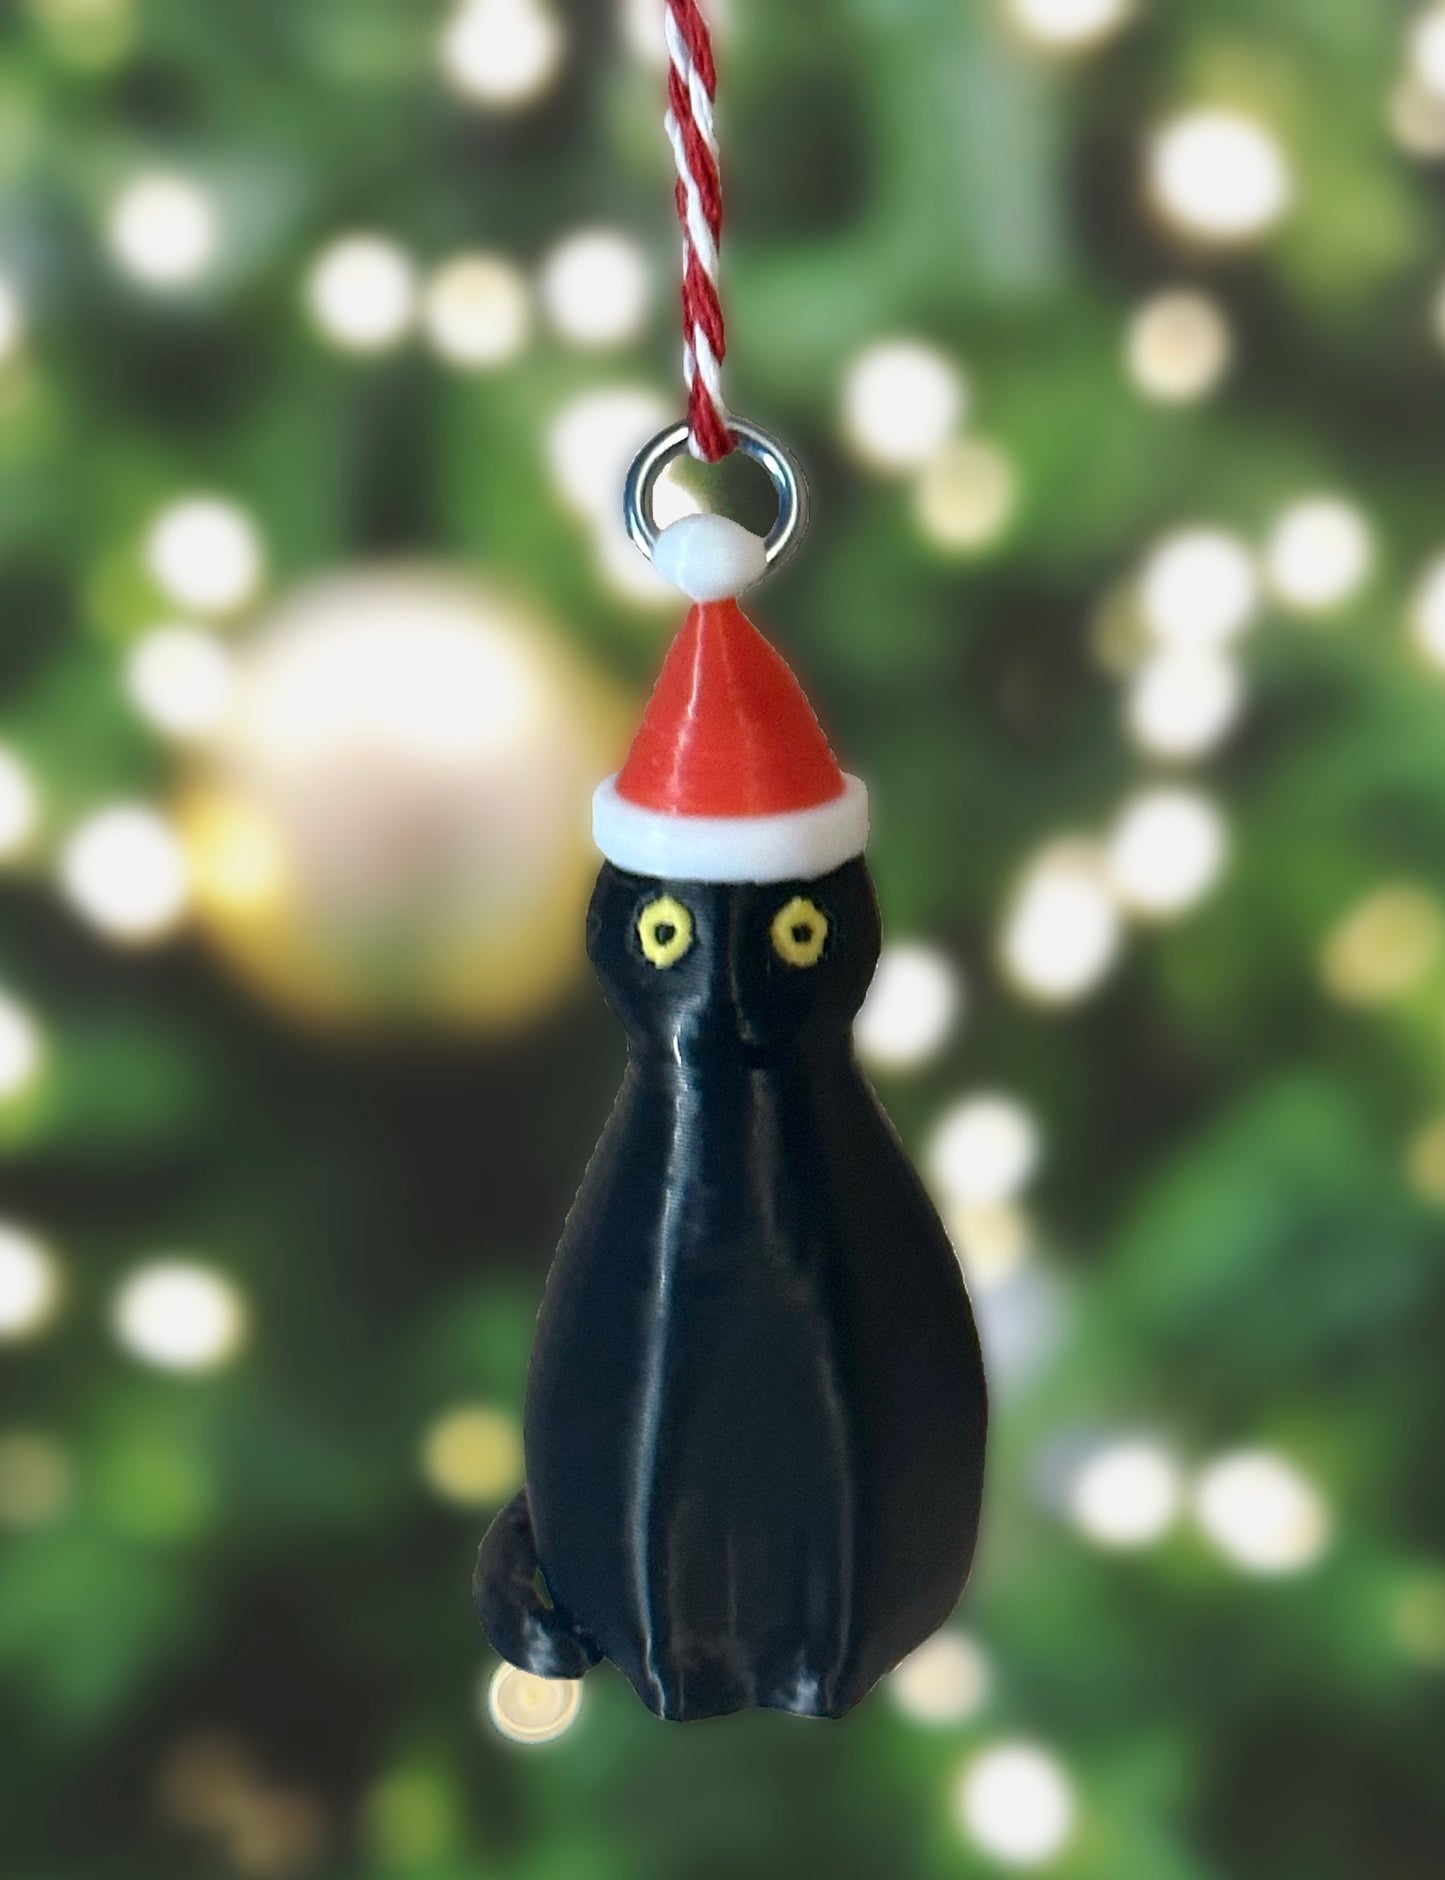 Soetta Cat Christmas Tree Ornaments - Made in USA - Miniature Black Santa and Santa Hat Ornaments (Black Santa Cat + Santa Hat)